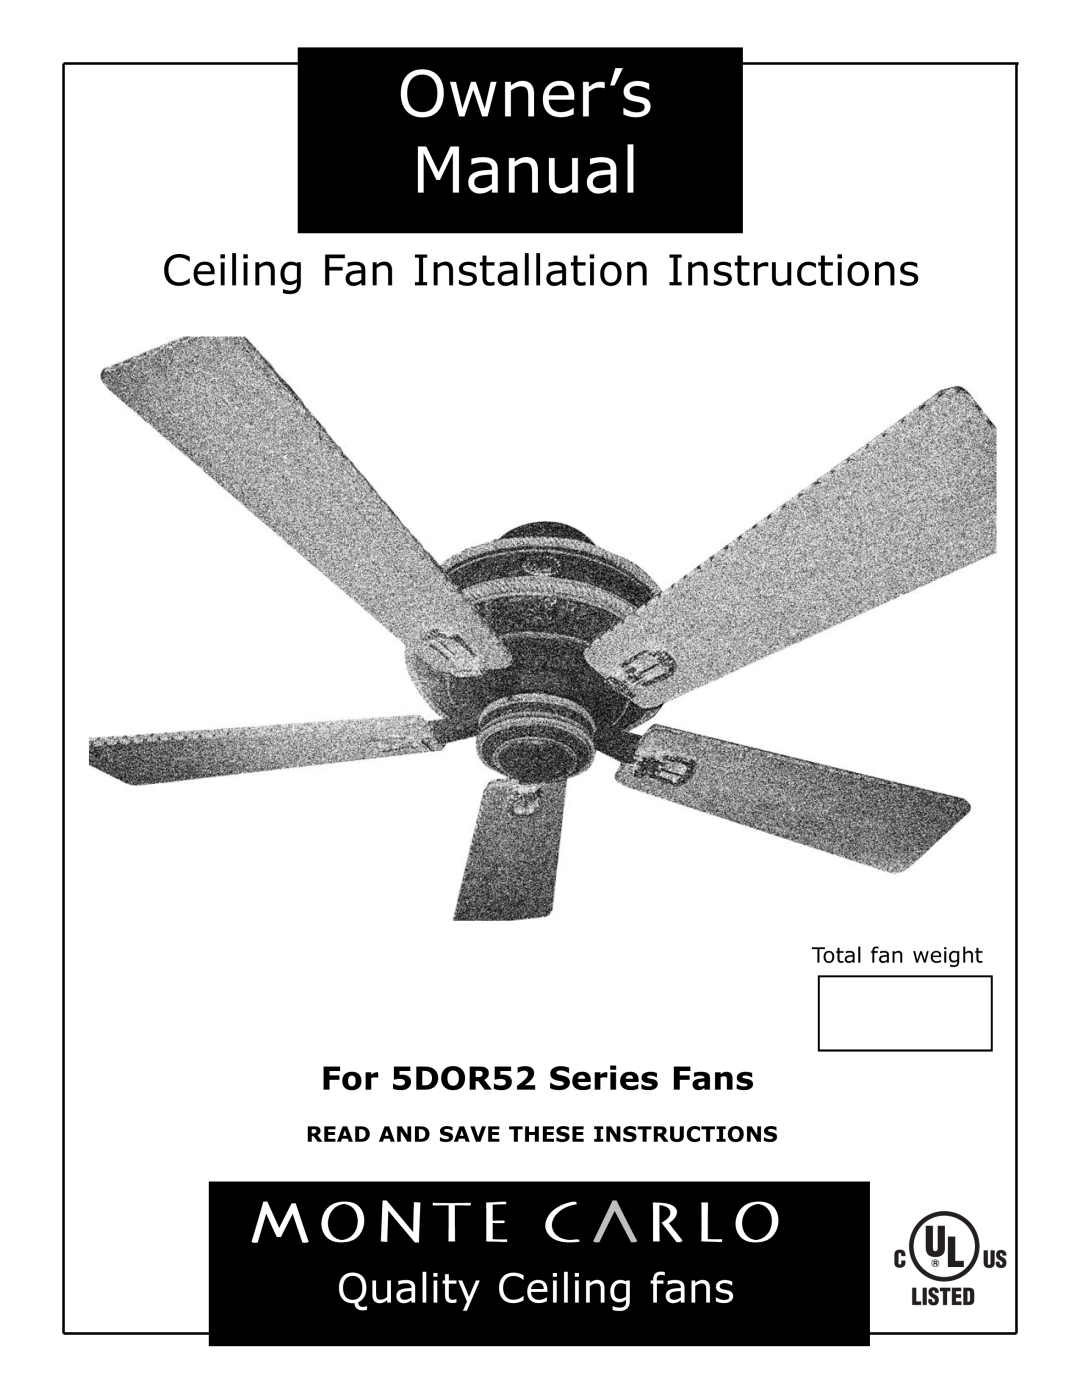 Monte Carlo Fan Company 5DOR52 owner manual Ceiling Fan Installation Instructions, Quality Ceiling fans, Total fan weight 